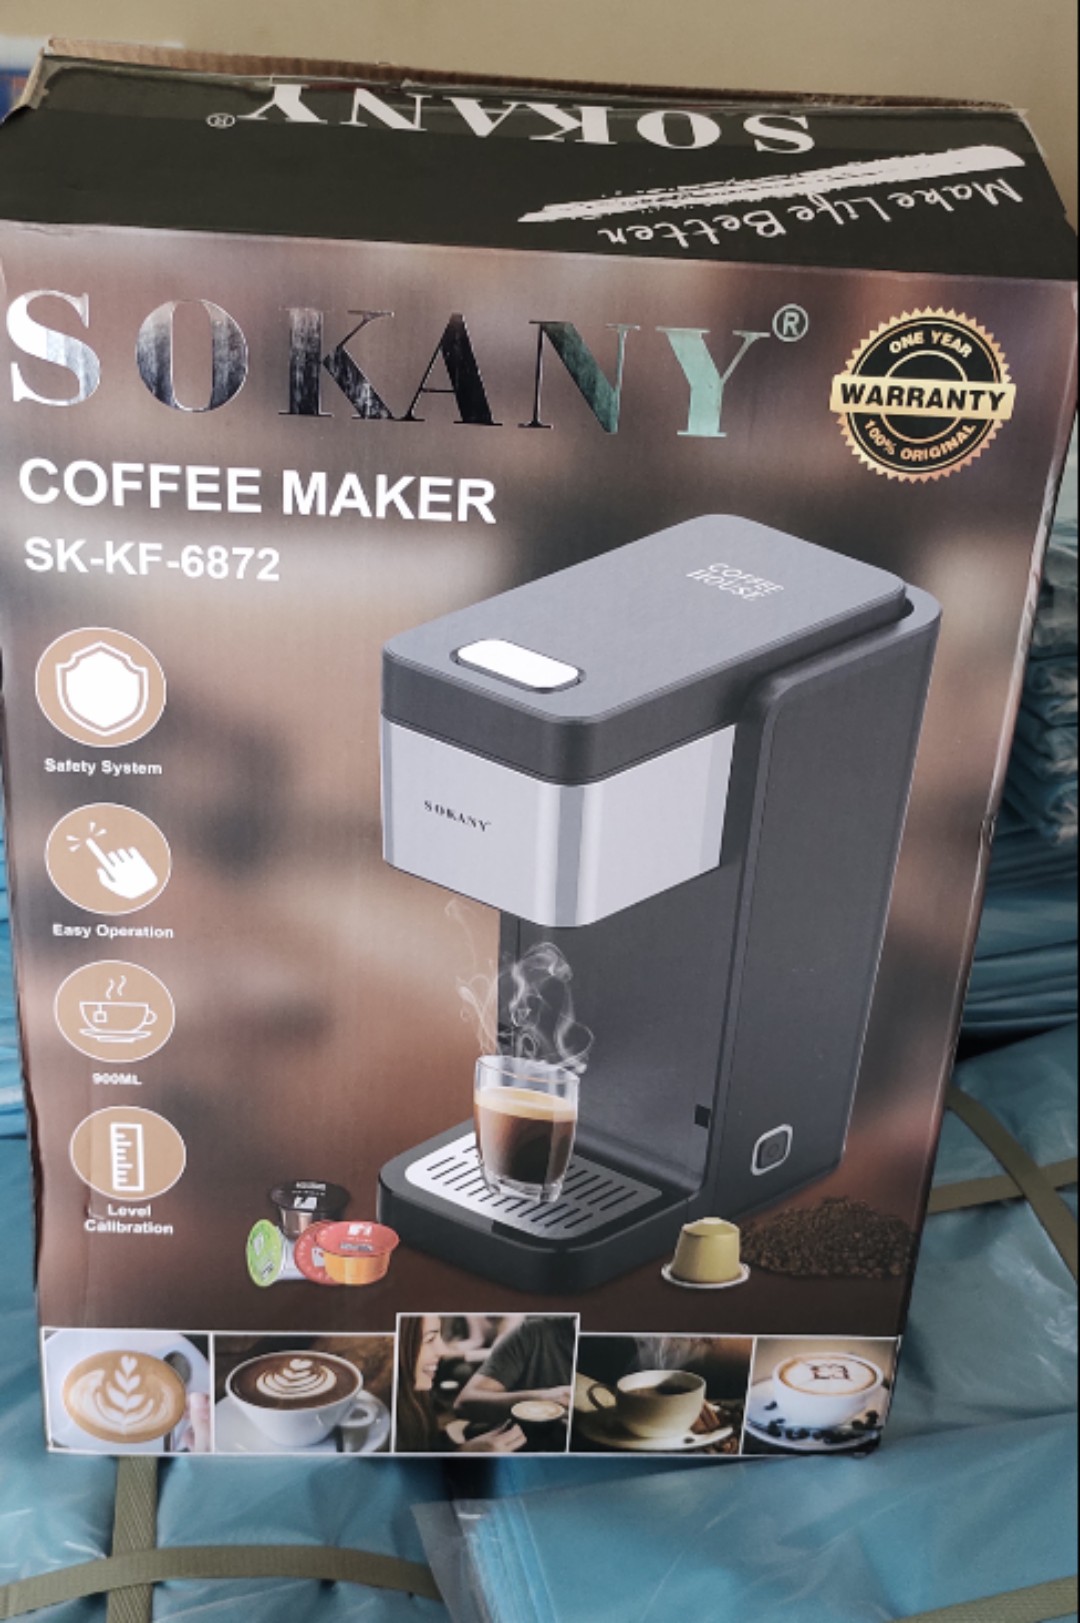 Sokany 2 In 1 Capsule Pressure Espresso & Ground Coffee Powder Coffee Maker  Machine 900ML Capacity 750W K-Cup Pods